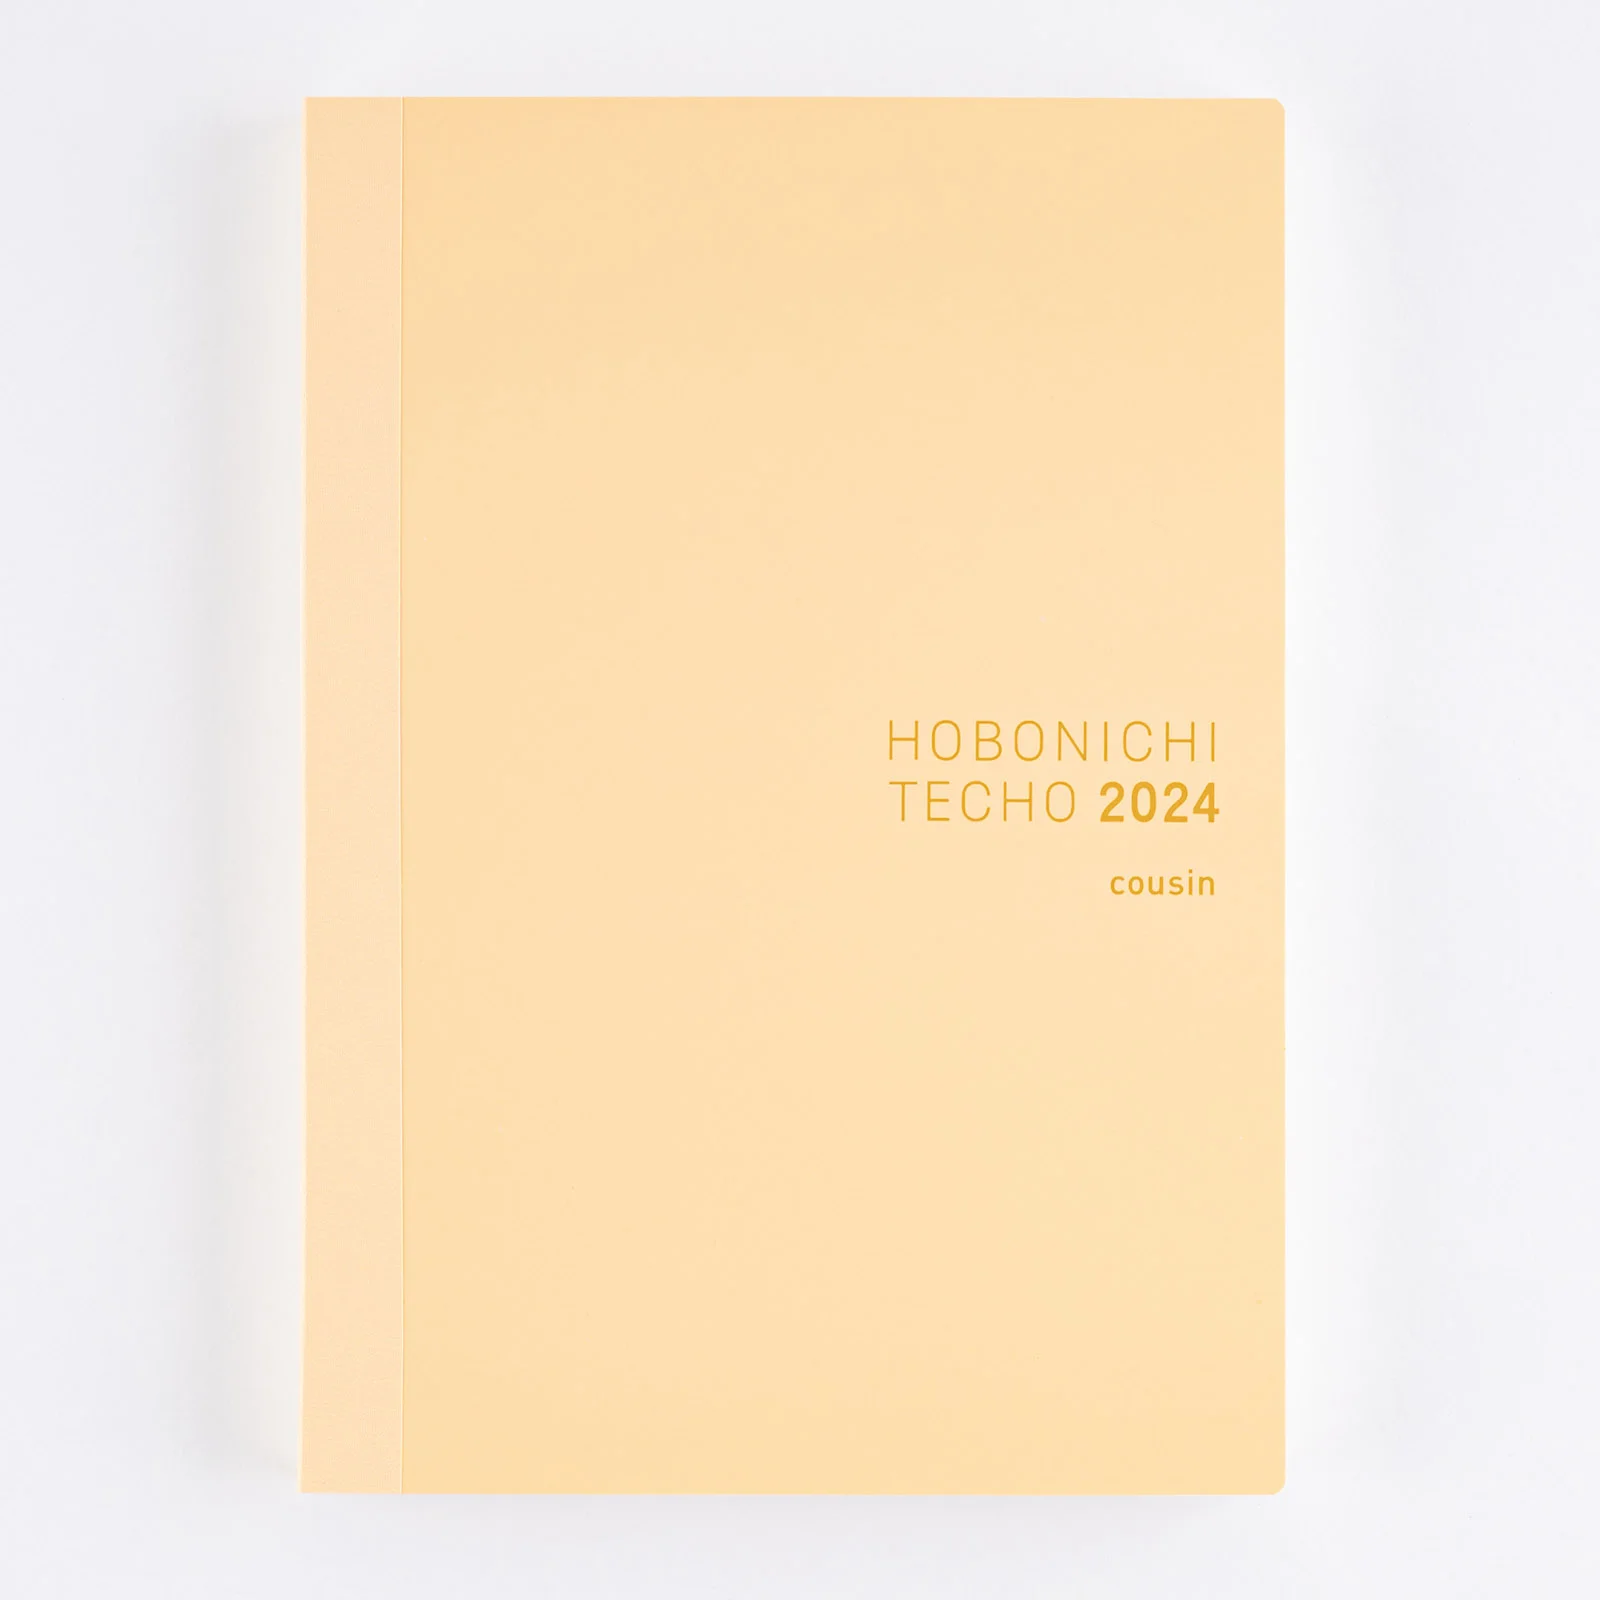 Hobonichi: Hobonichi Address Book - Accessories Lineup - Accessories -  Hobonichi Techo 2024